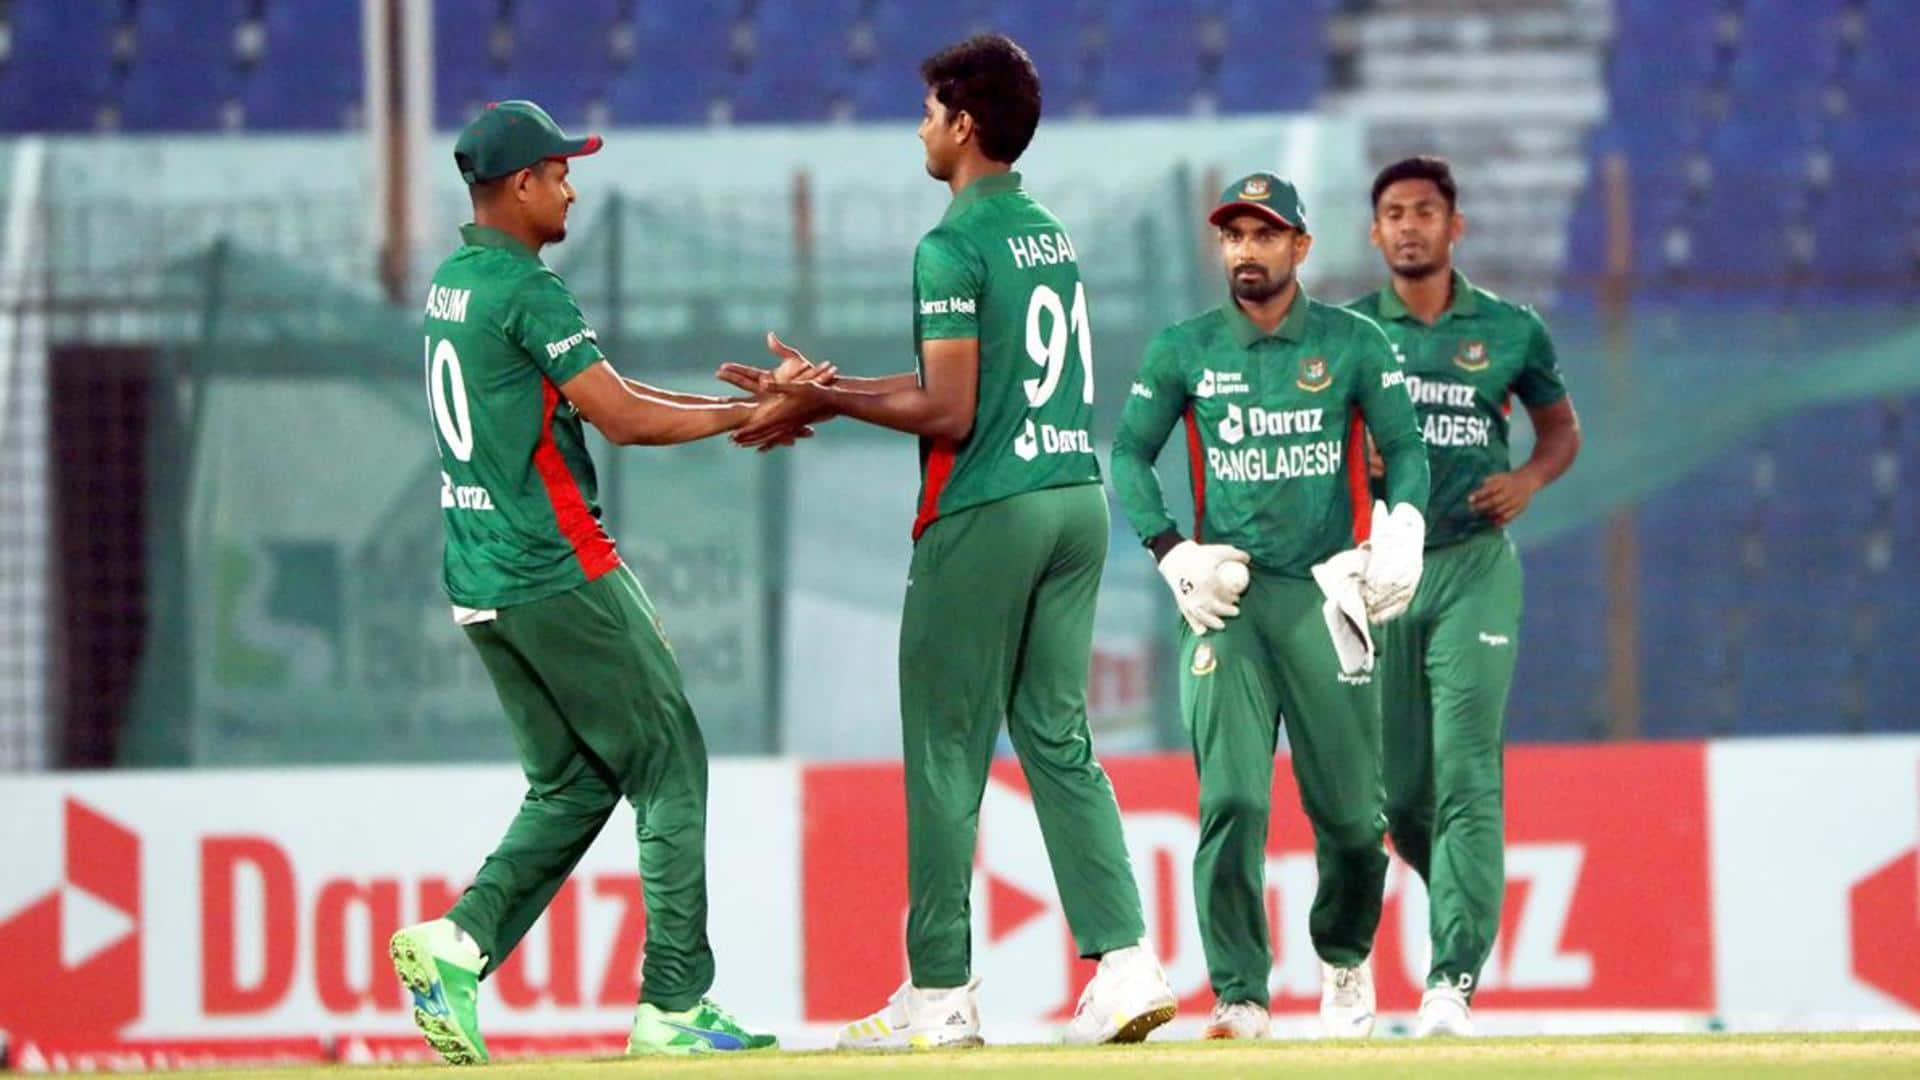 Bangladesh beat Ireland in 1st T20I (DLS): Key stats